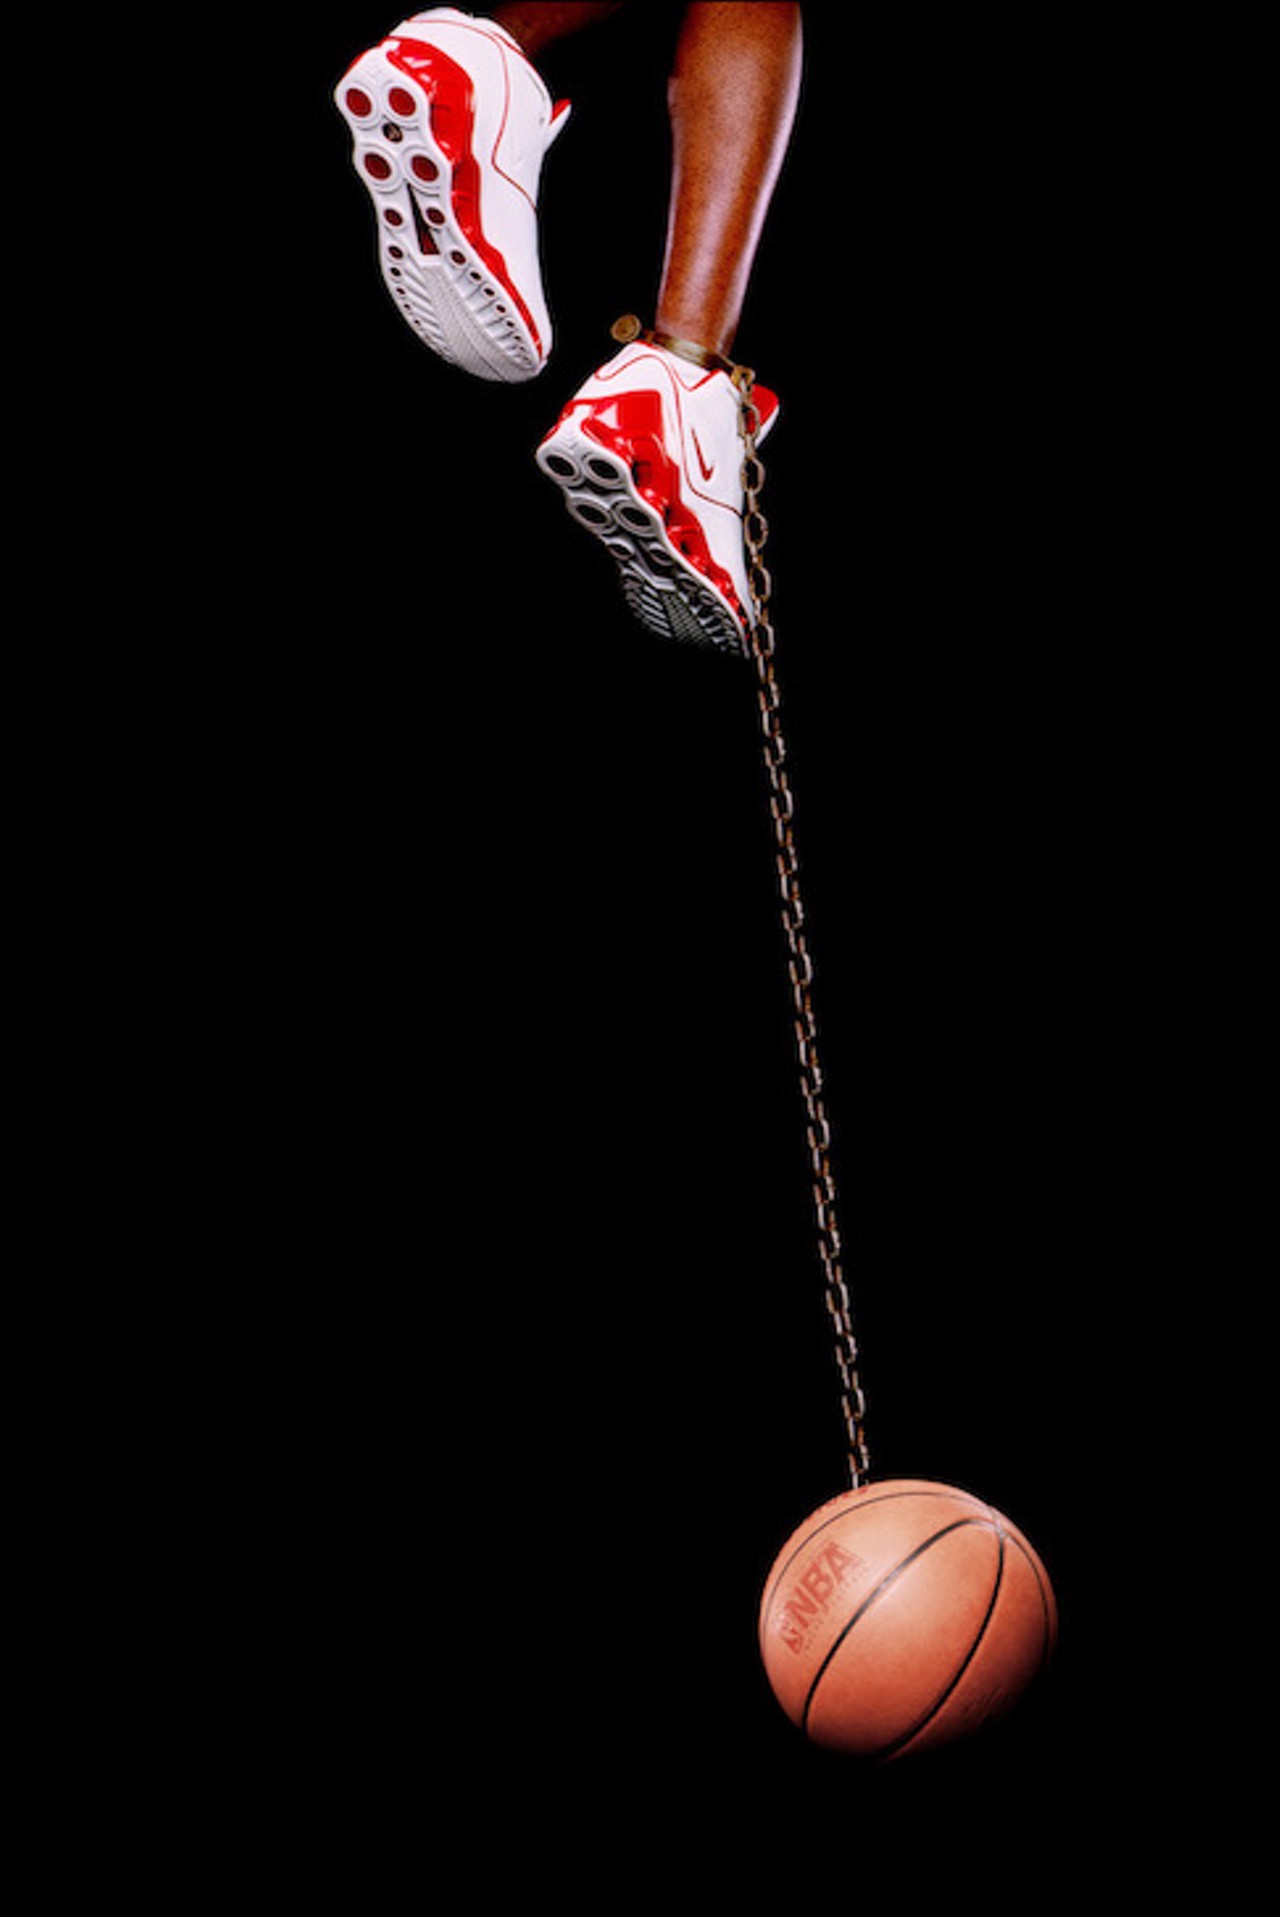 Hank Willis Thomas, Basketball and Chain, 2003. Digital C-print.